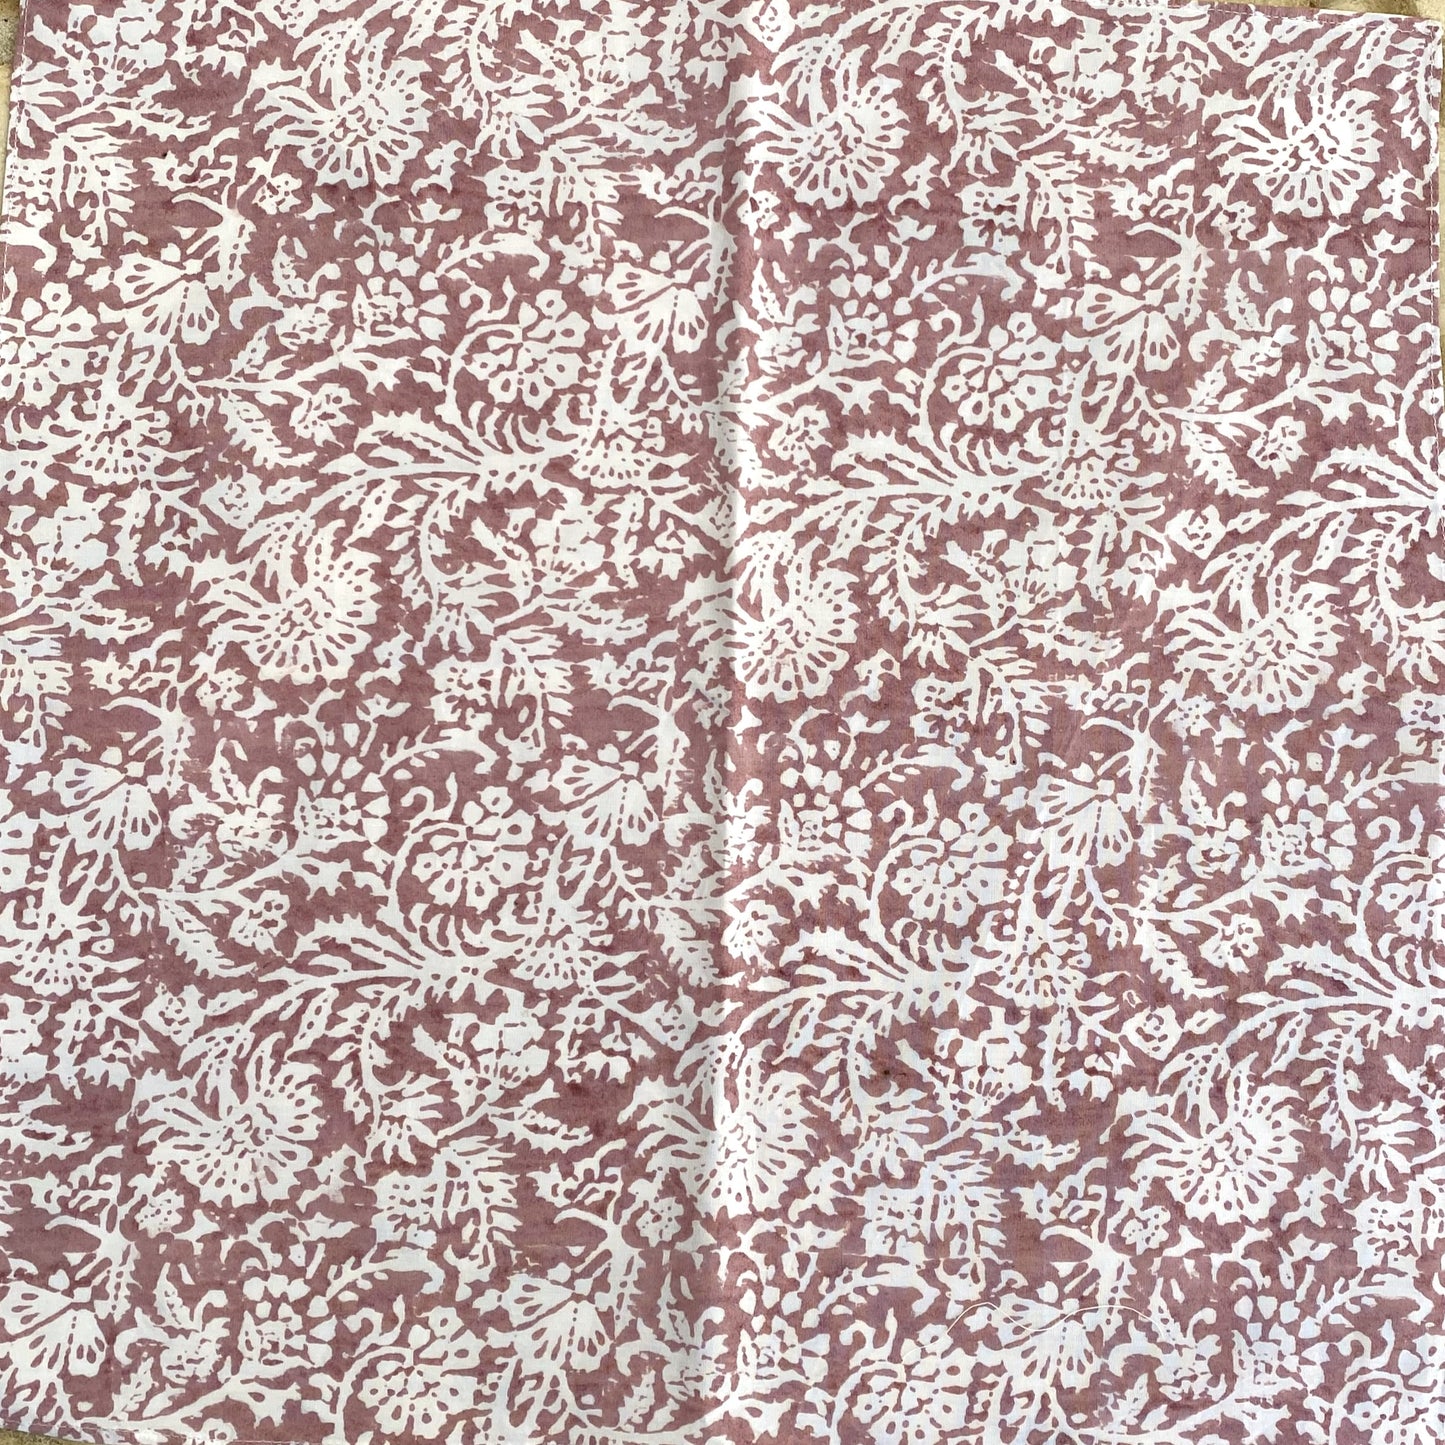 4 x block print leaf cotton napkin dusty pink